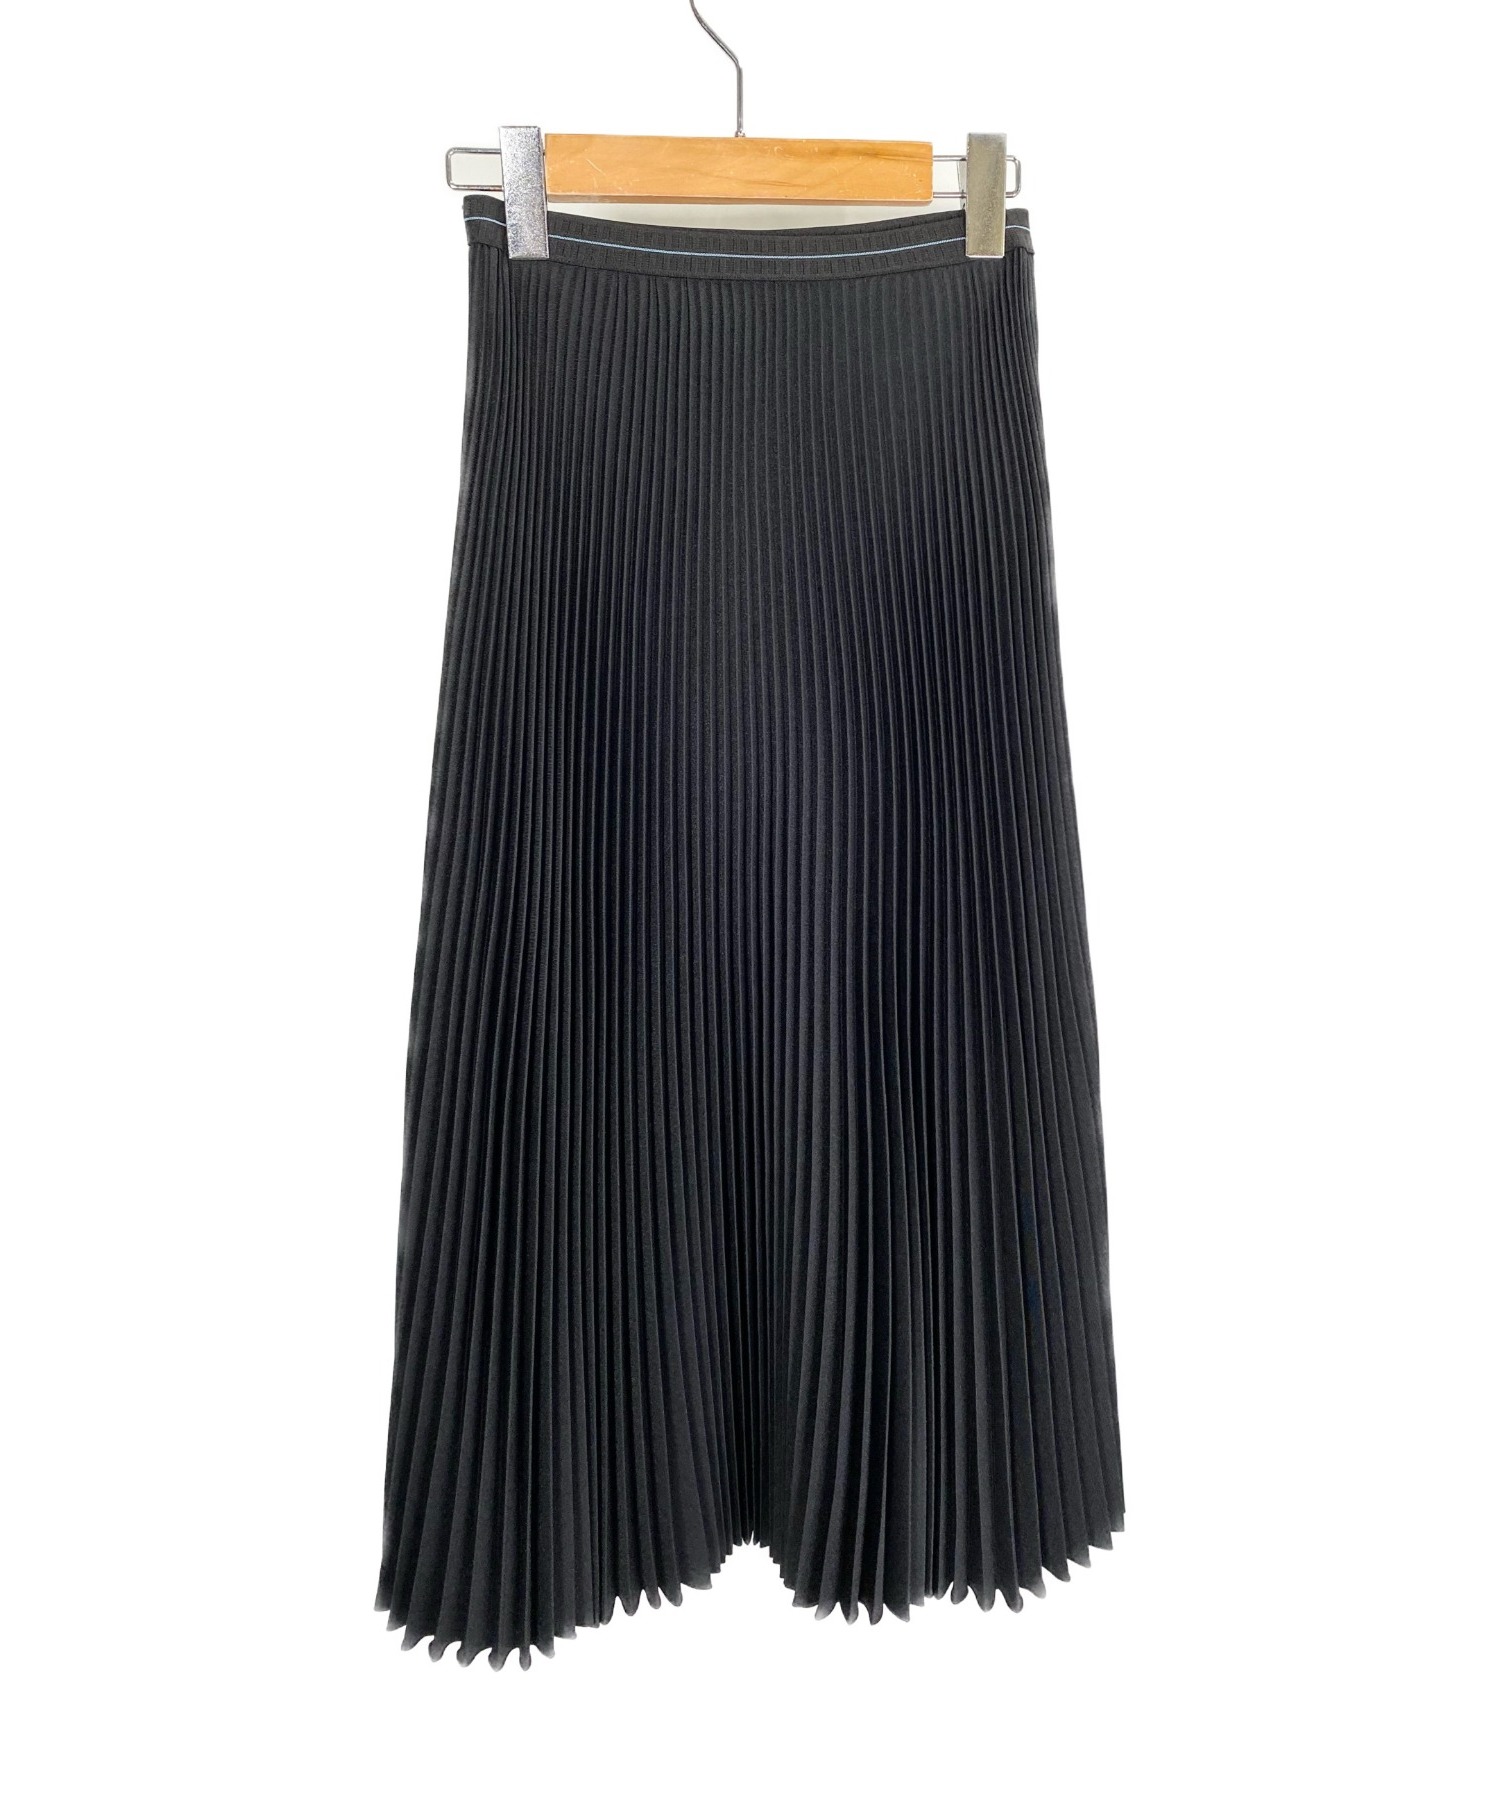 PRADA (プラダ) ツイルプリーツスカート ブラック サイズ:36